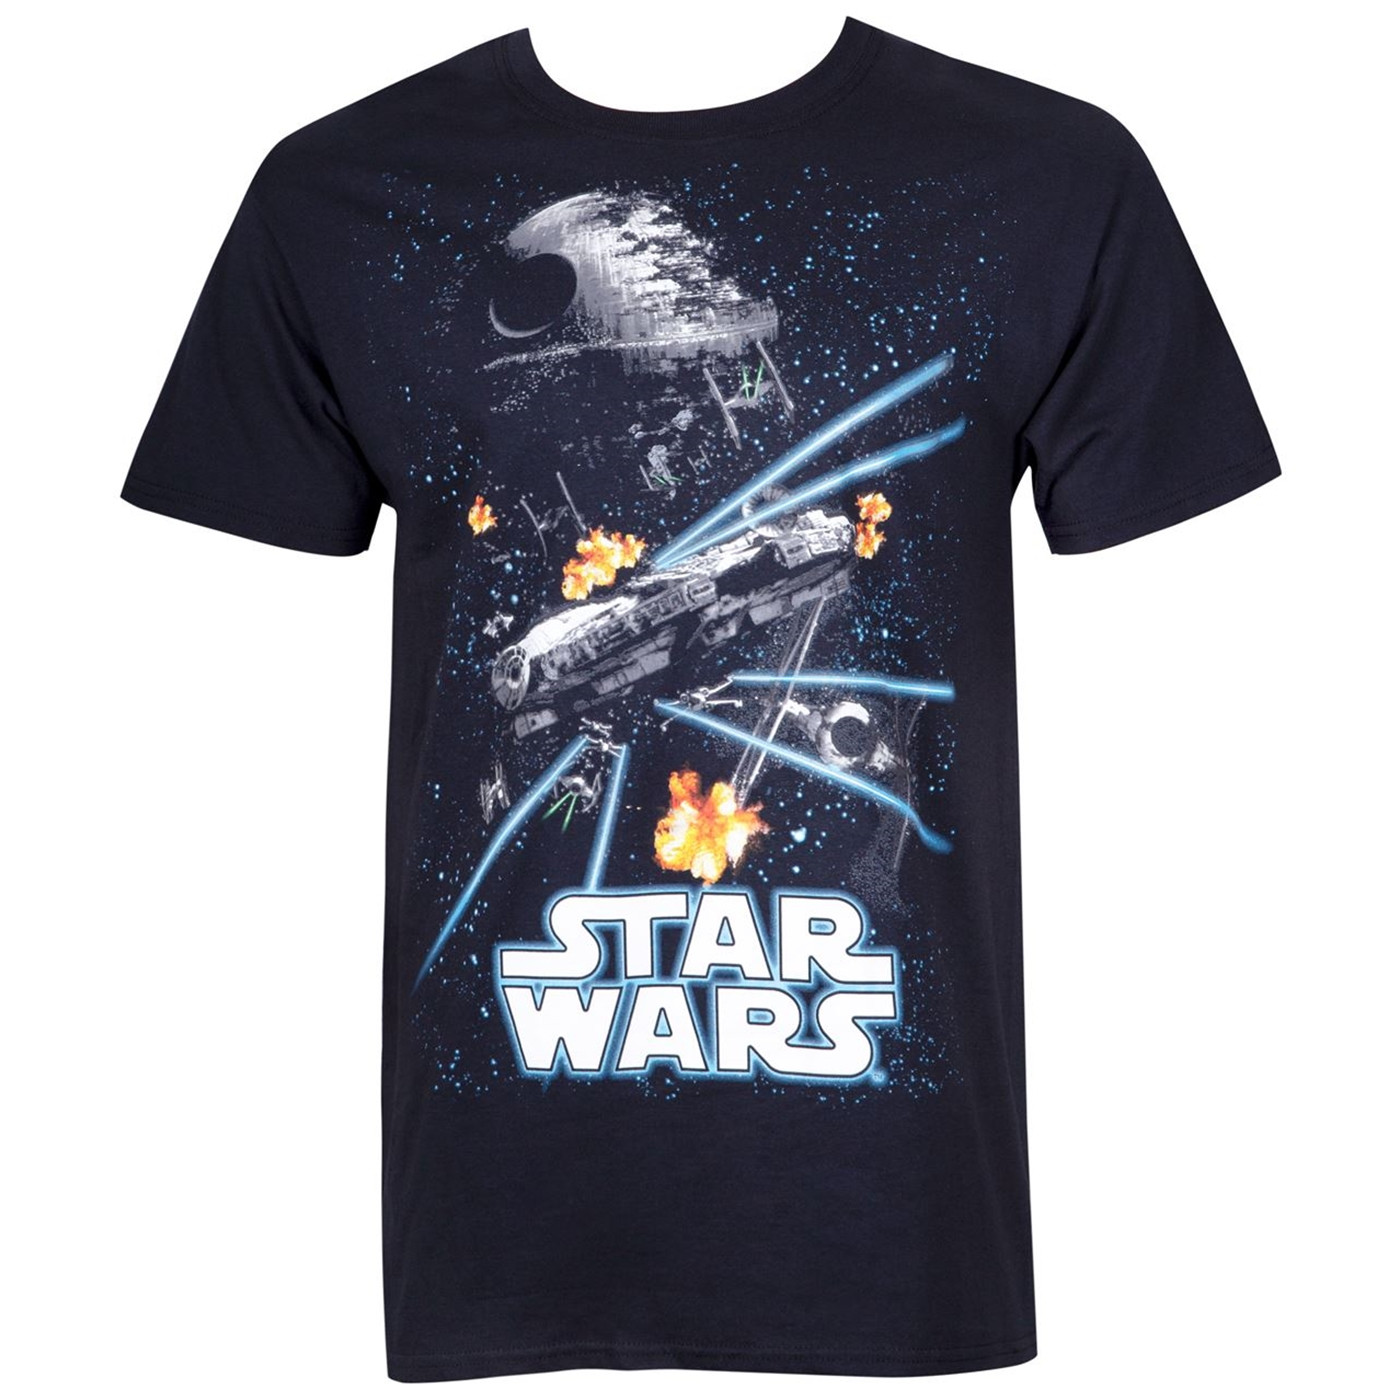 Star Wars Space Action Men's T-Shirt